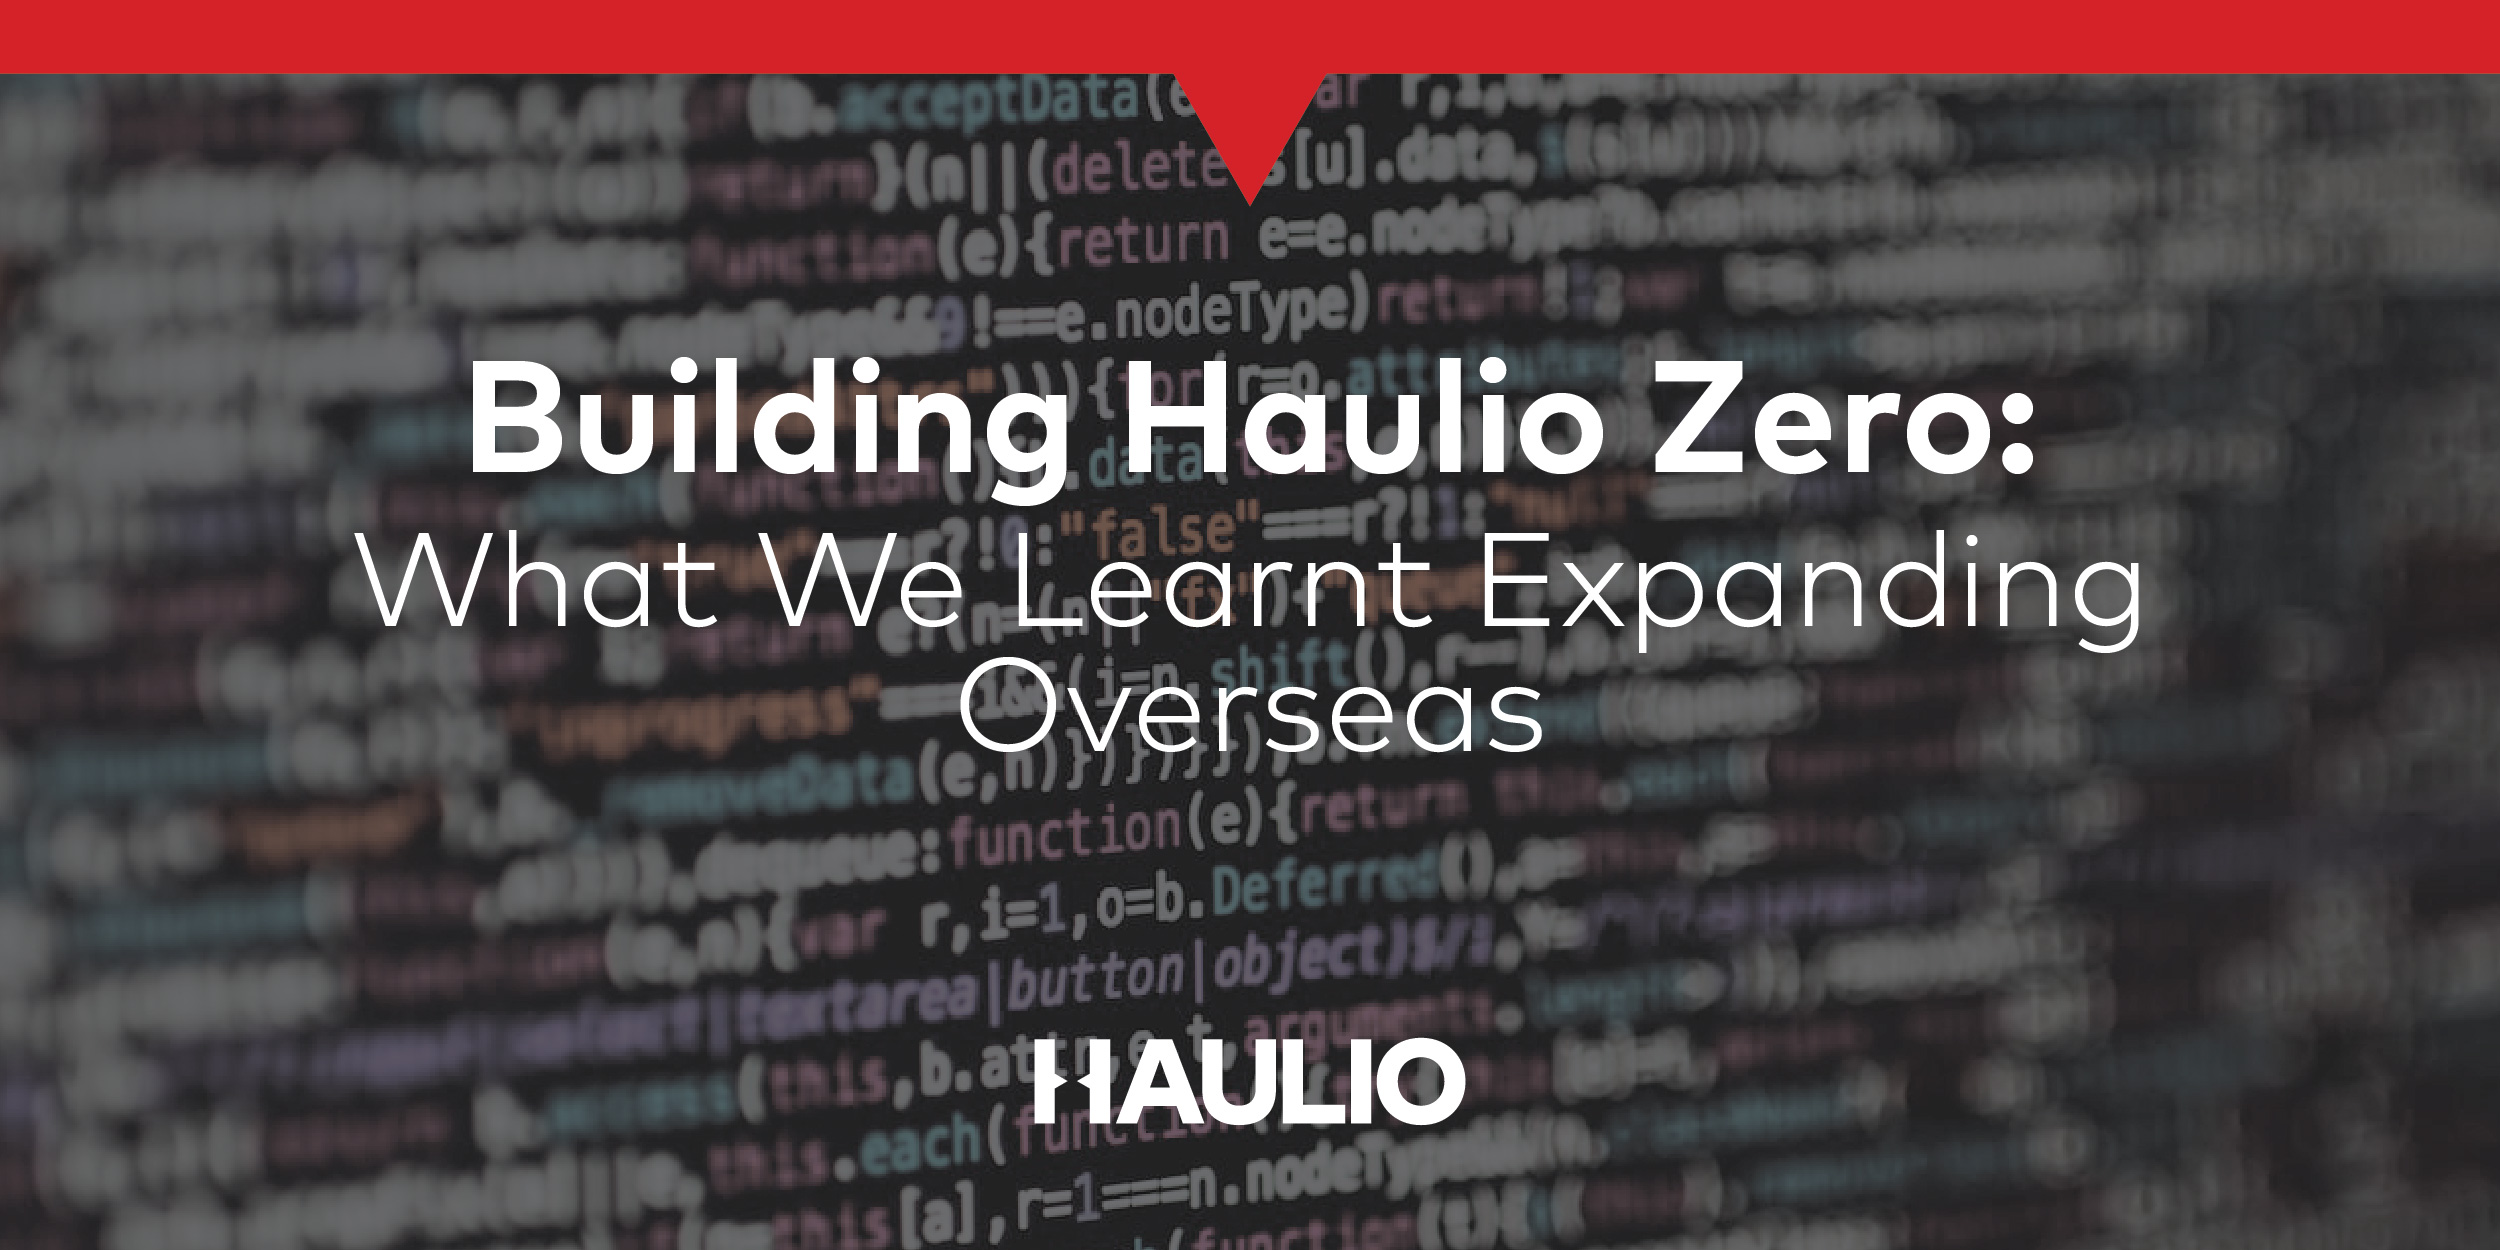 Building Haulio Zero